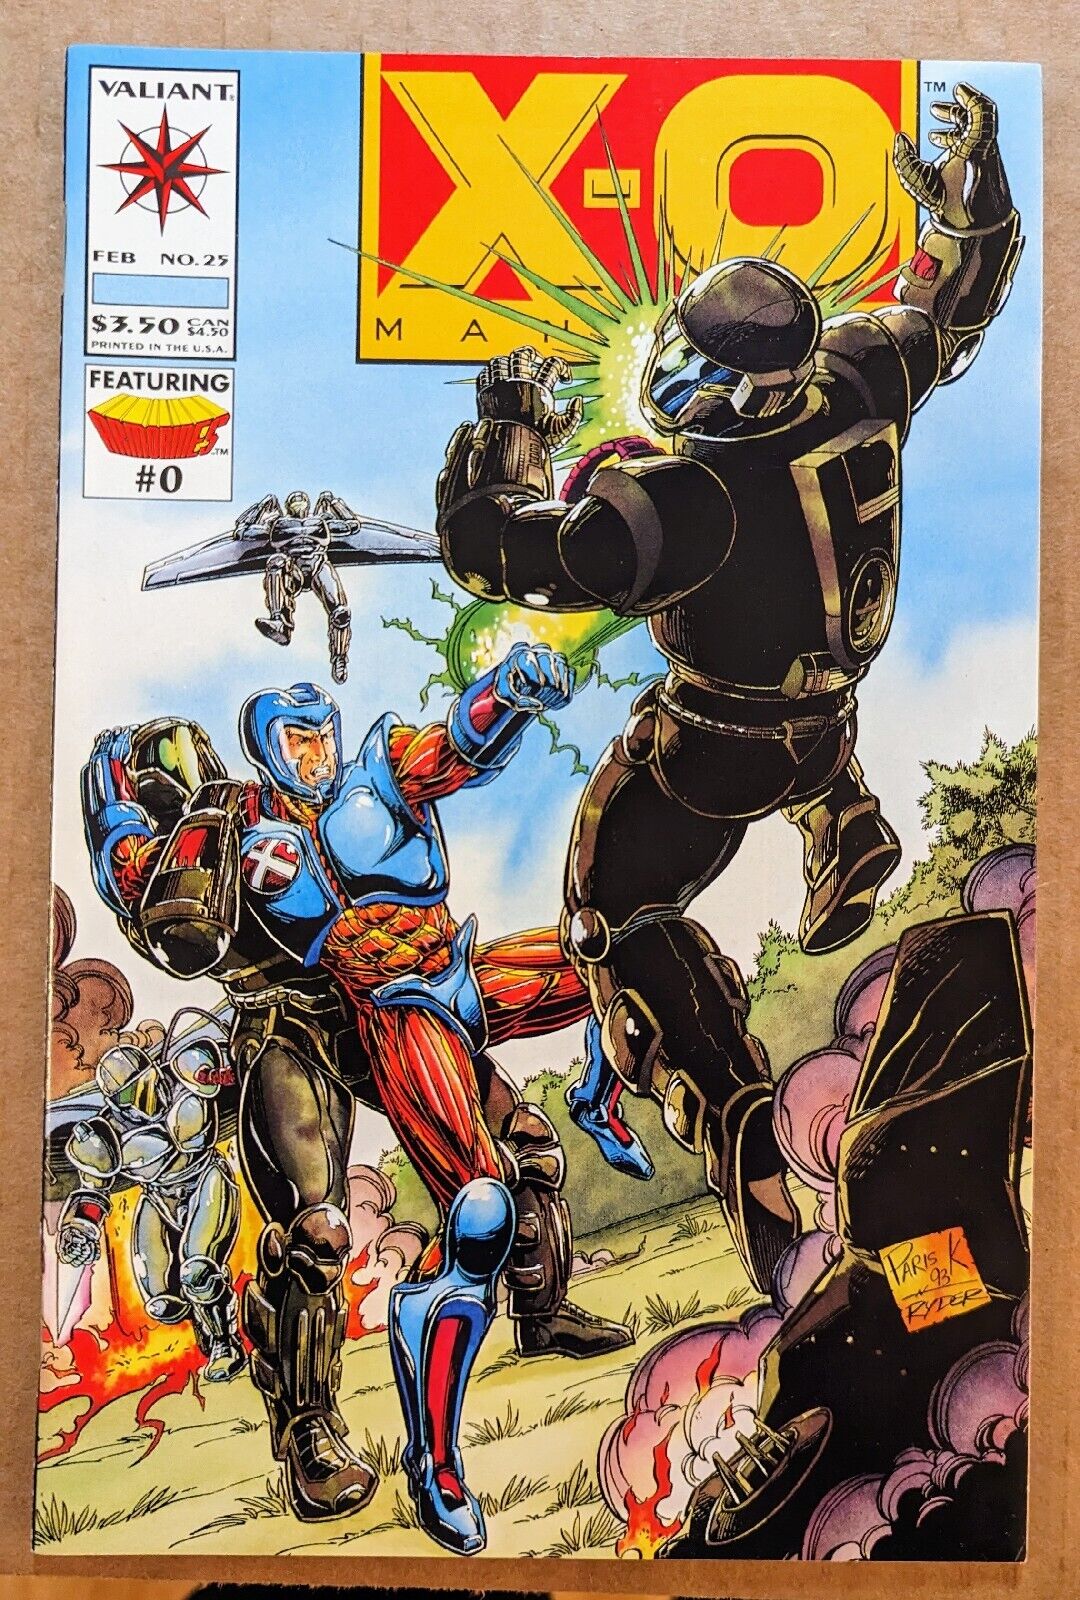 X-O Manowar #25 Featuring Armorines #0 1994 Valiant Comics NM